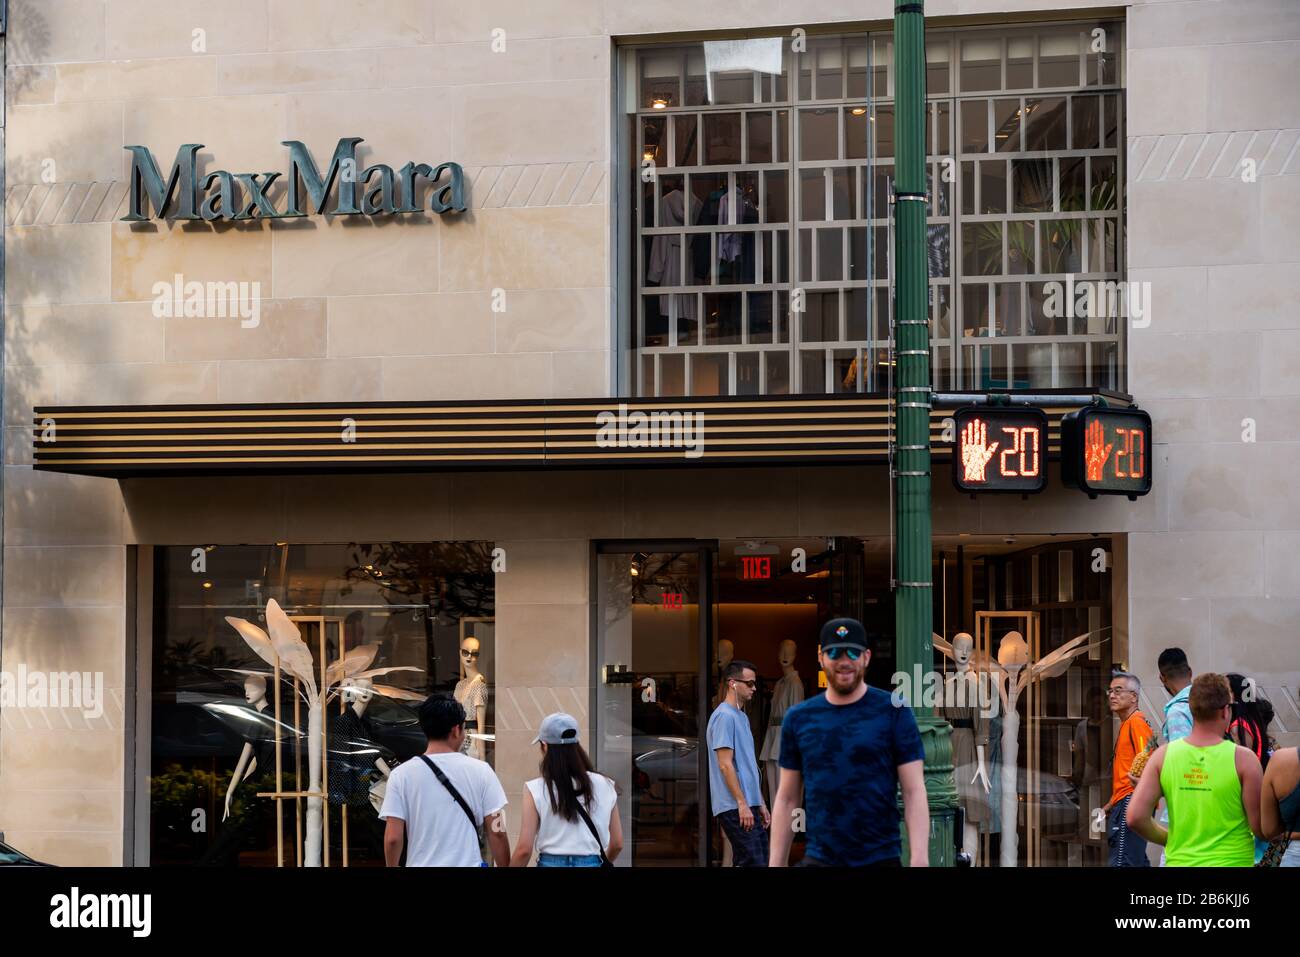 Les piétons marchent devant un magasin MaxMara. Banque D'Images